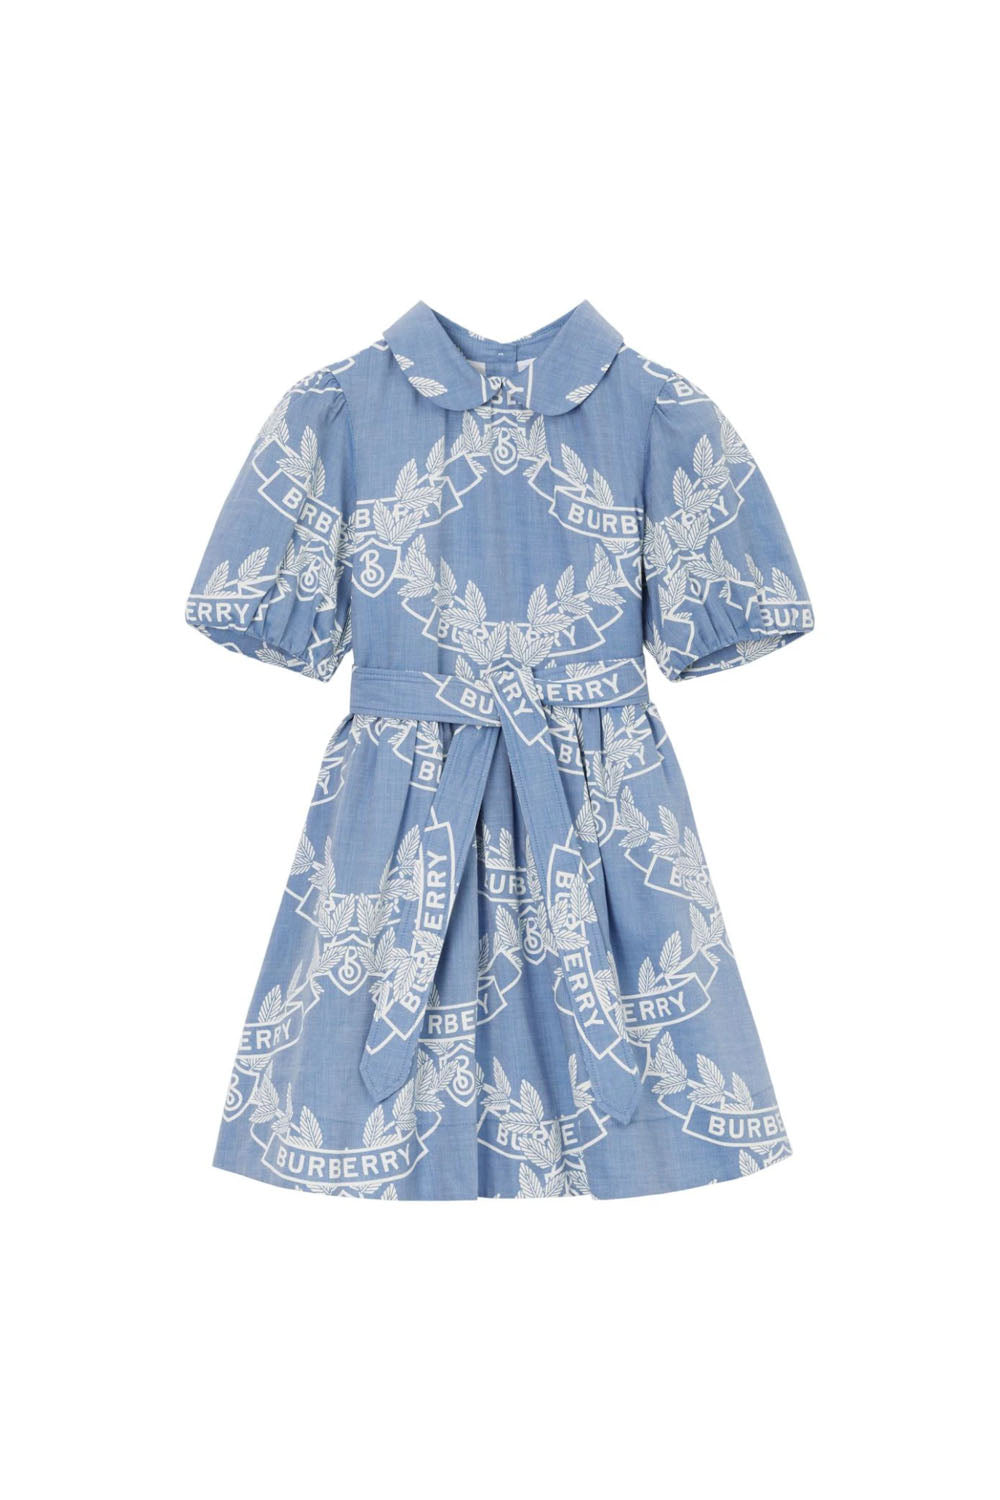 ​Oak Leaf Crest Cotton Dress for Girls - Maison7